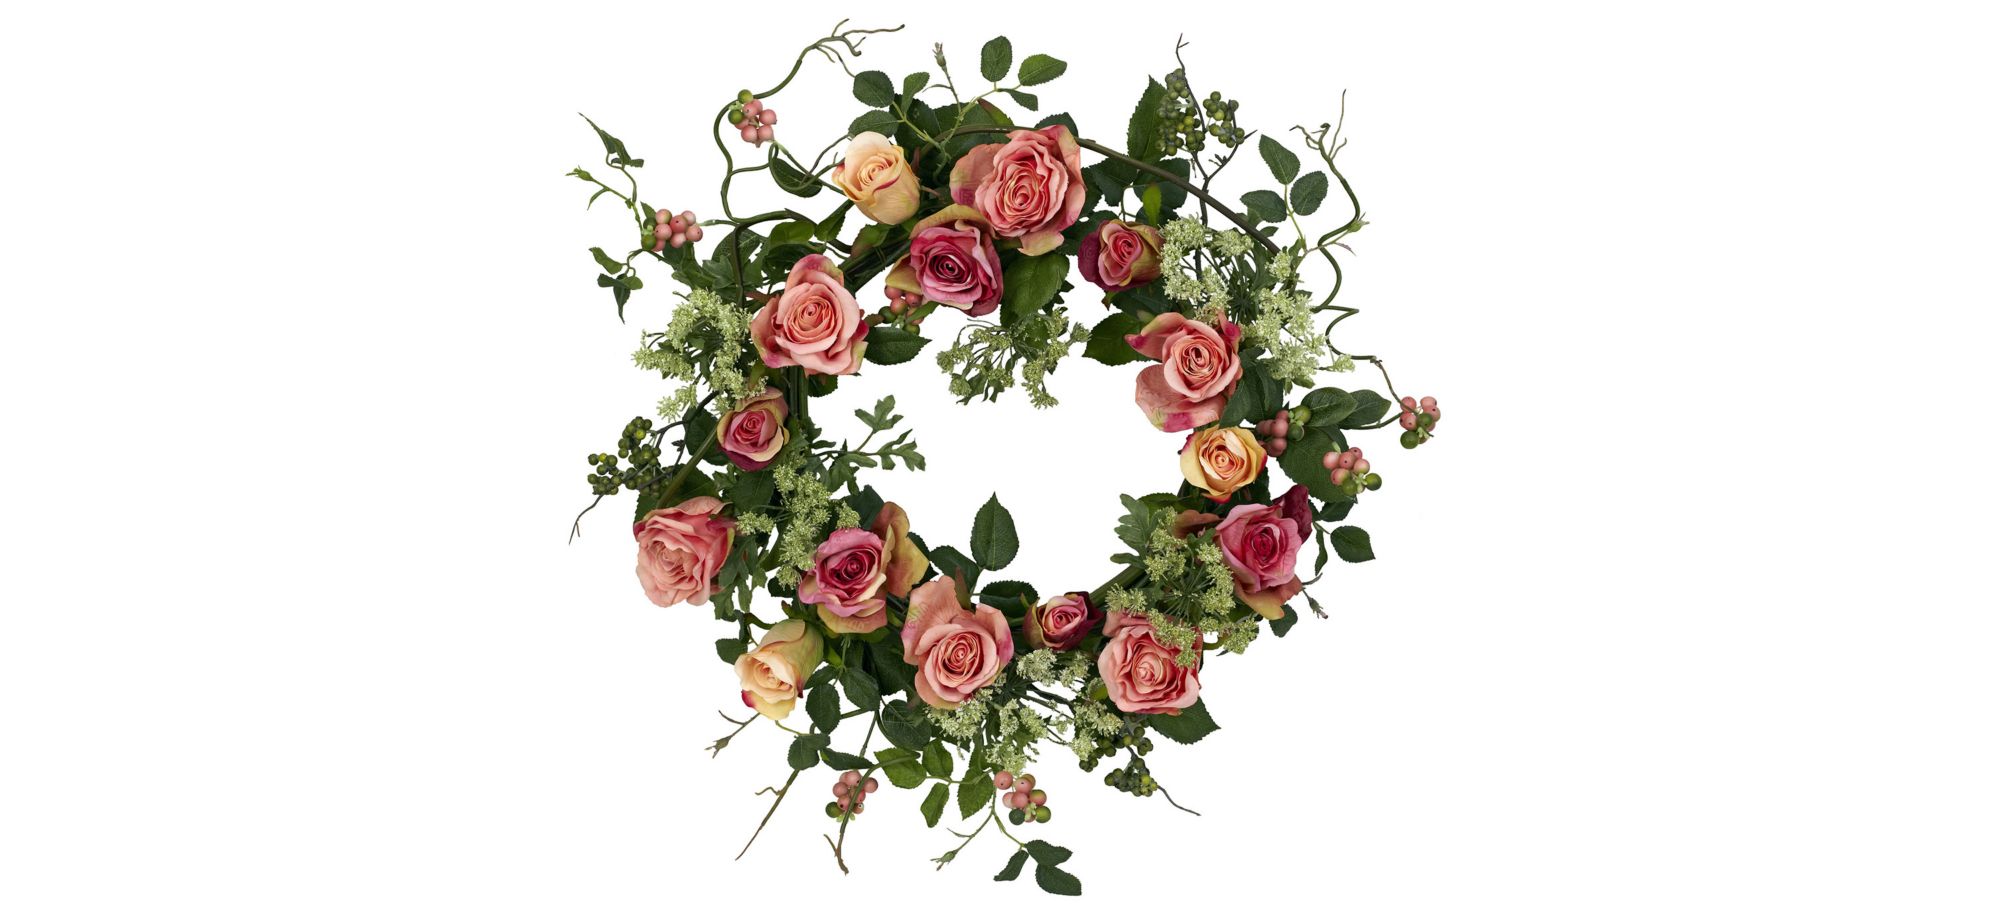 Rose Artificial Wreath in Peach by Bellanest